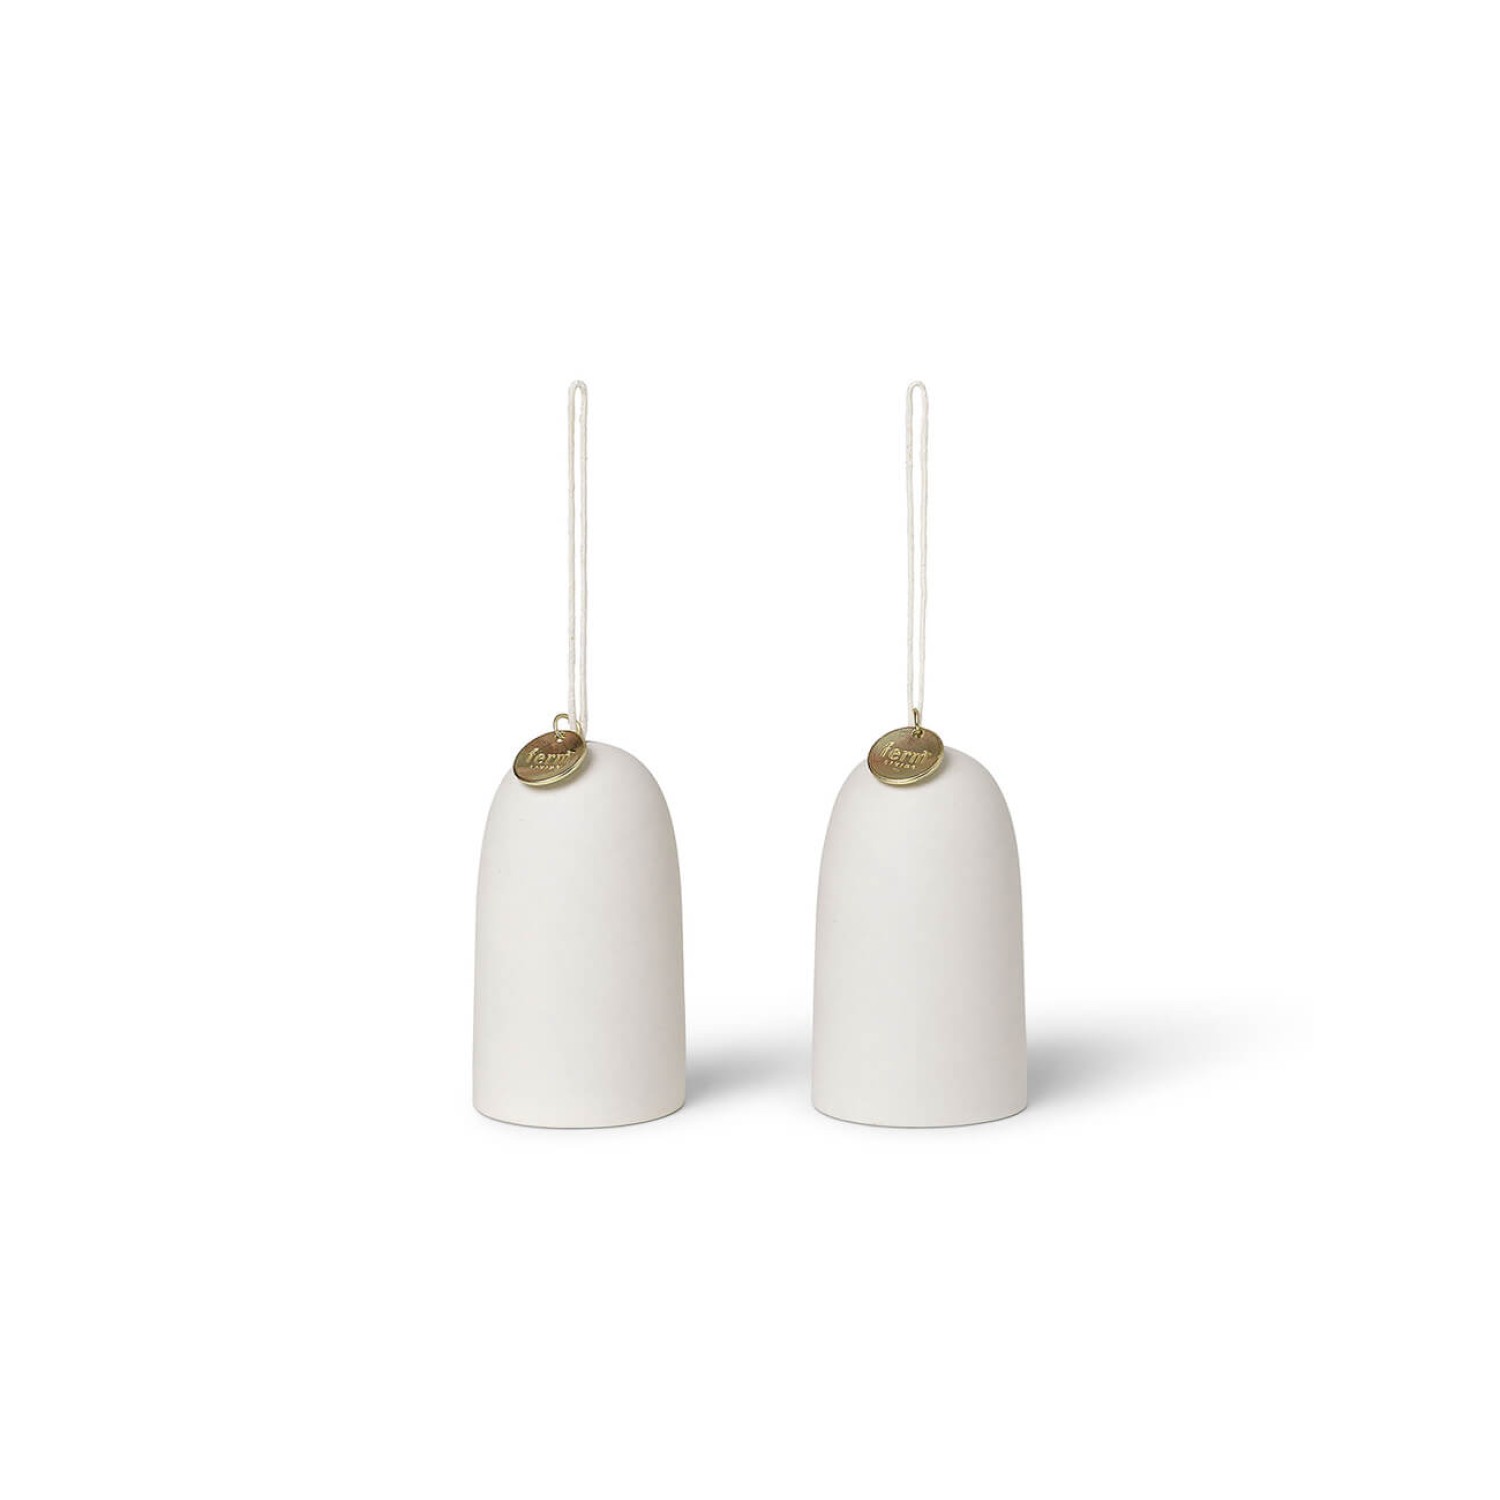 Bell Ceramic Ornament - Set of 2 Off-White